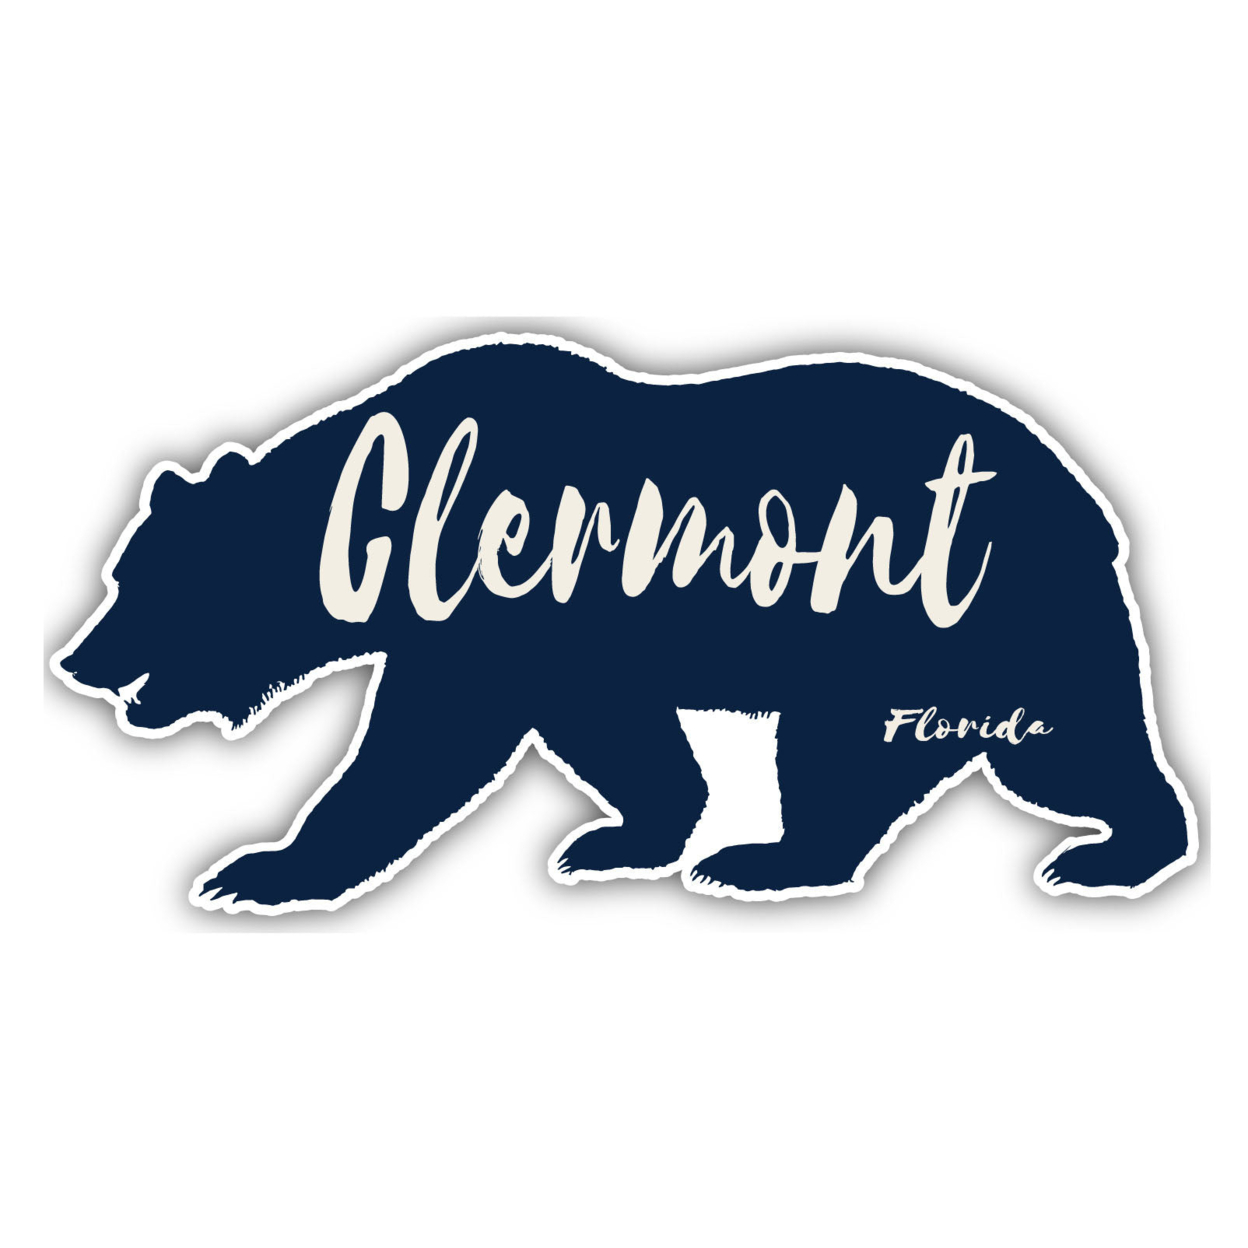 Clermont Florida Souvenir Decorative Stickers (Choose Theme And Size) - Single Unit, 6-Inch, Bear